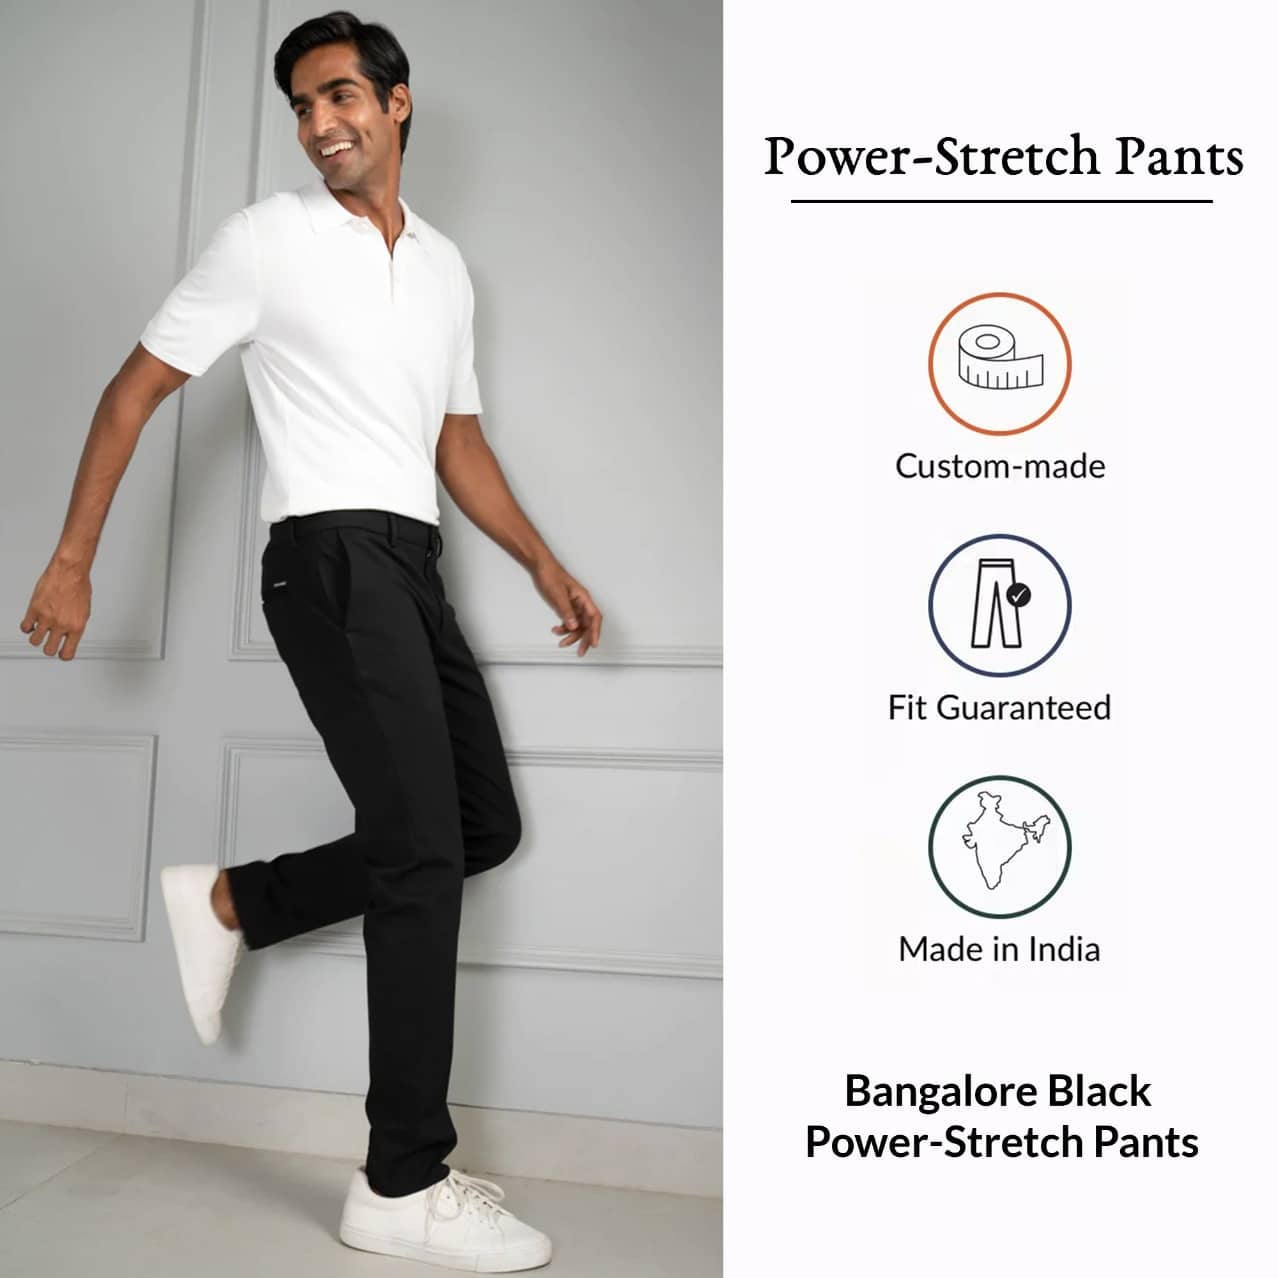 Bangalore Black Power-Stretch Cargo Pants